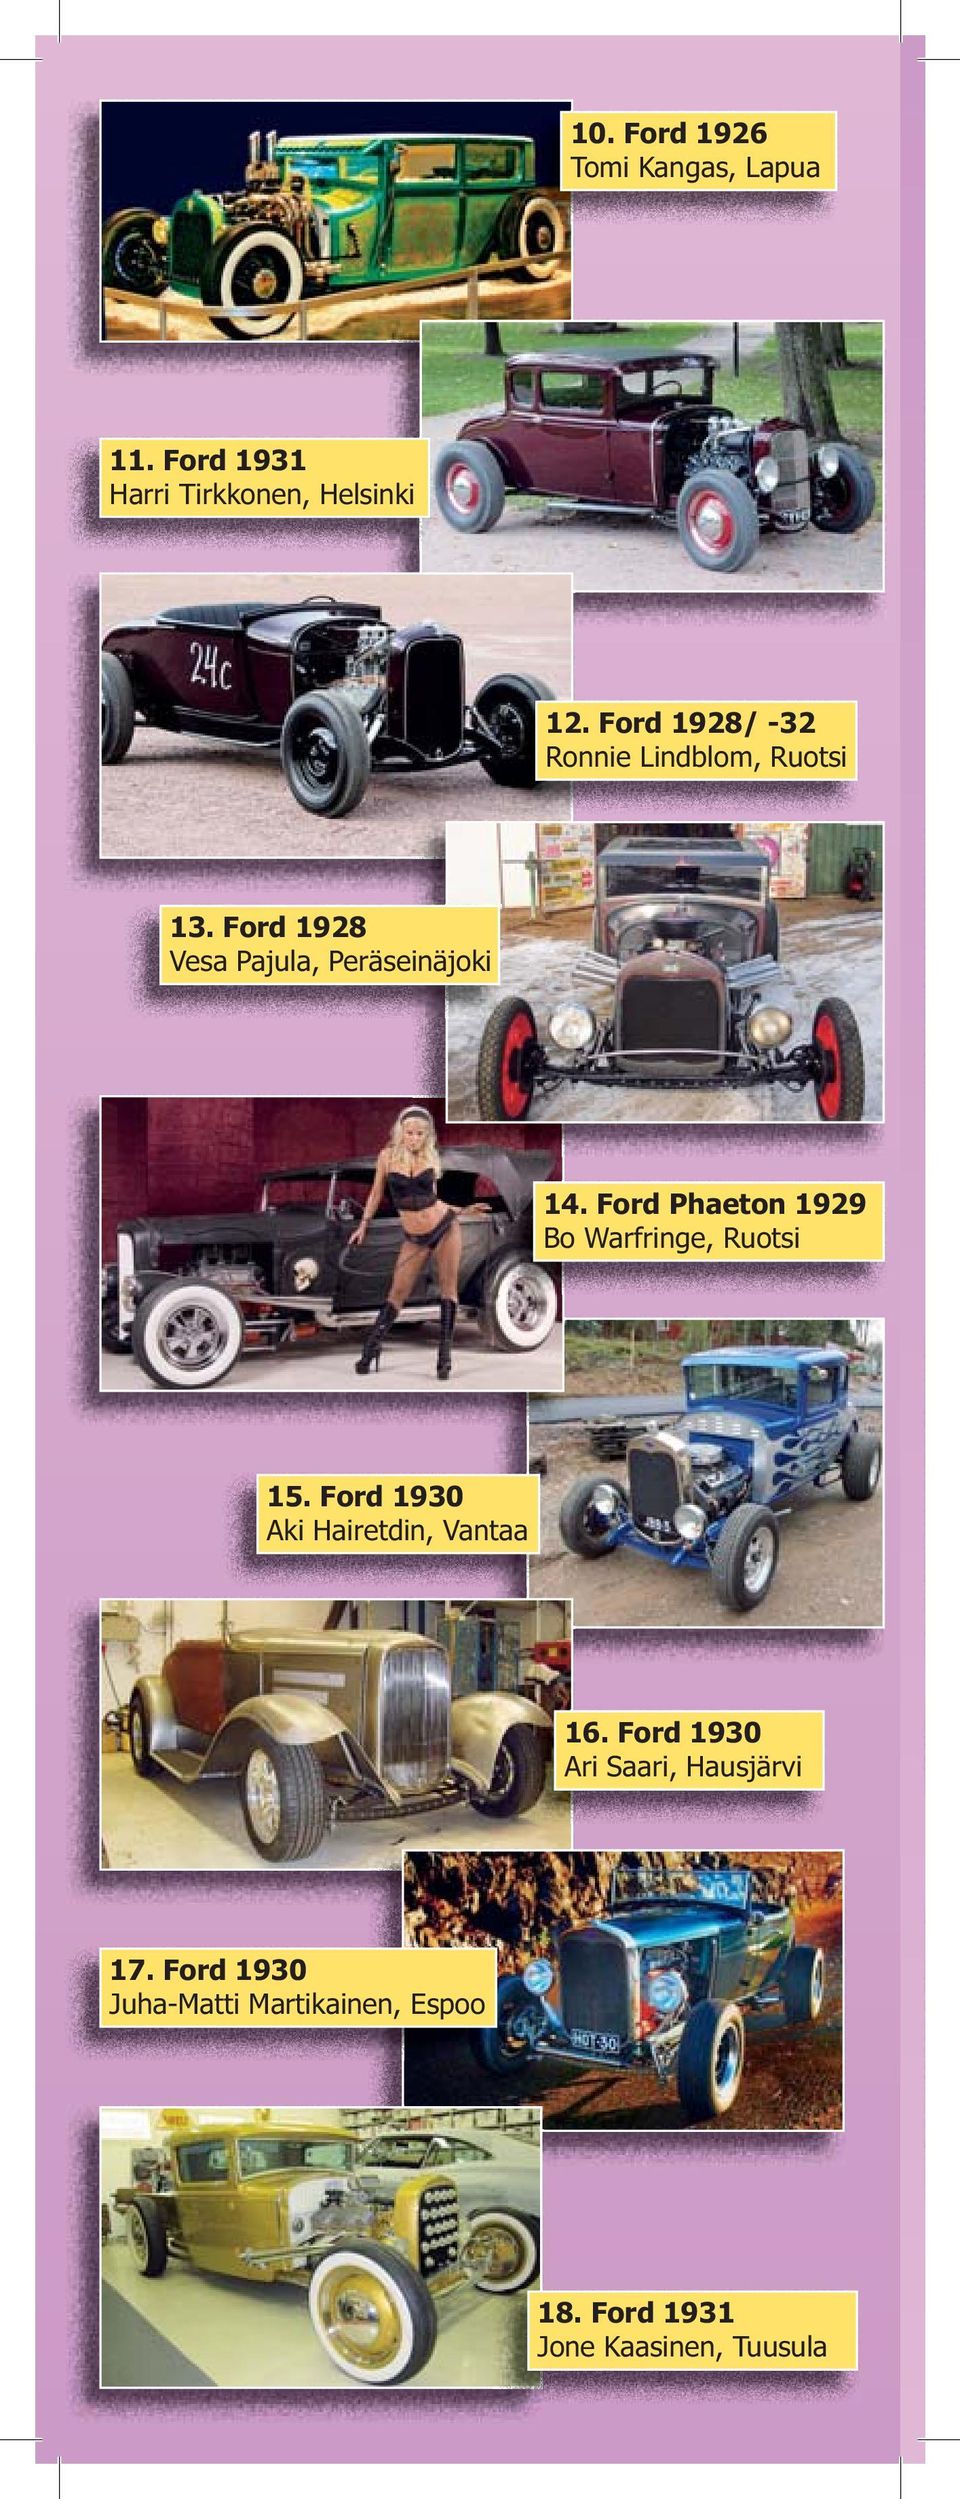 Ford Phaeton 1929 Bo Warfringe, Ruotsi 15. Ford 1930 Aki Hairetdin, Vantaa 16.